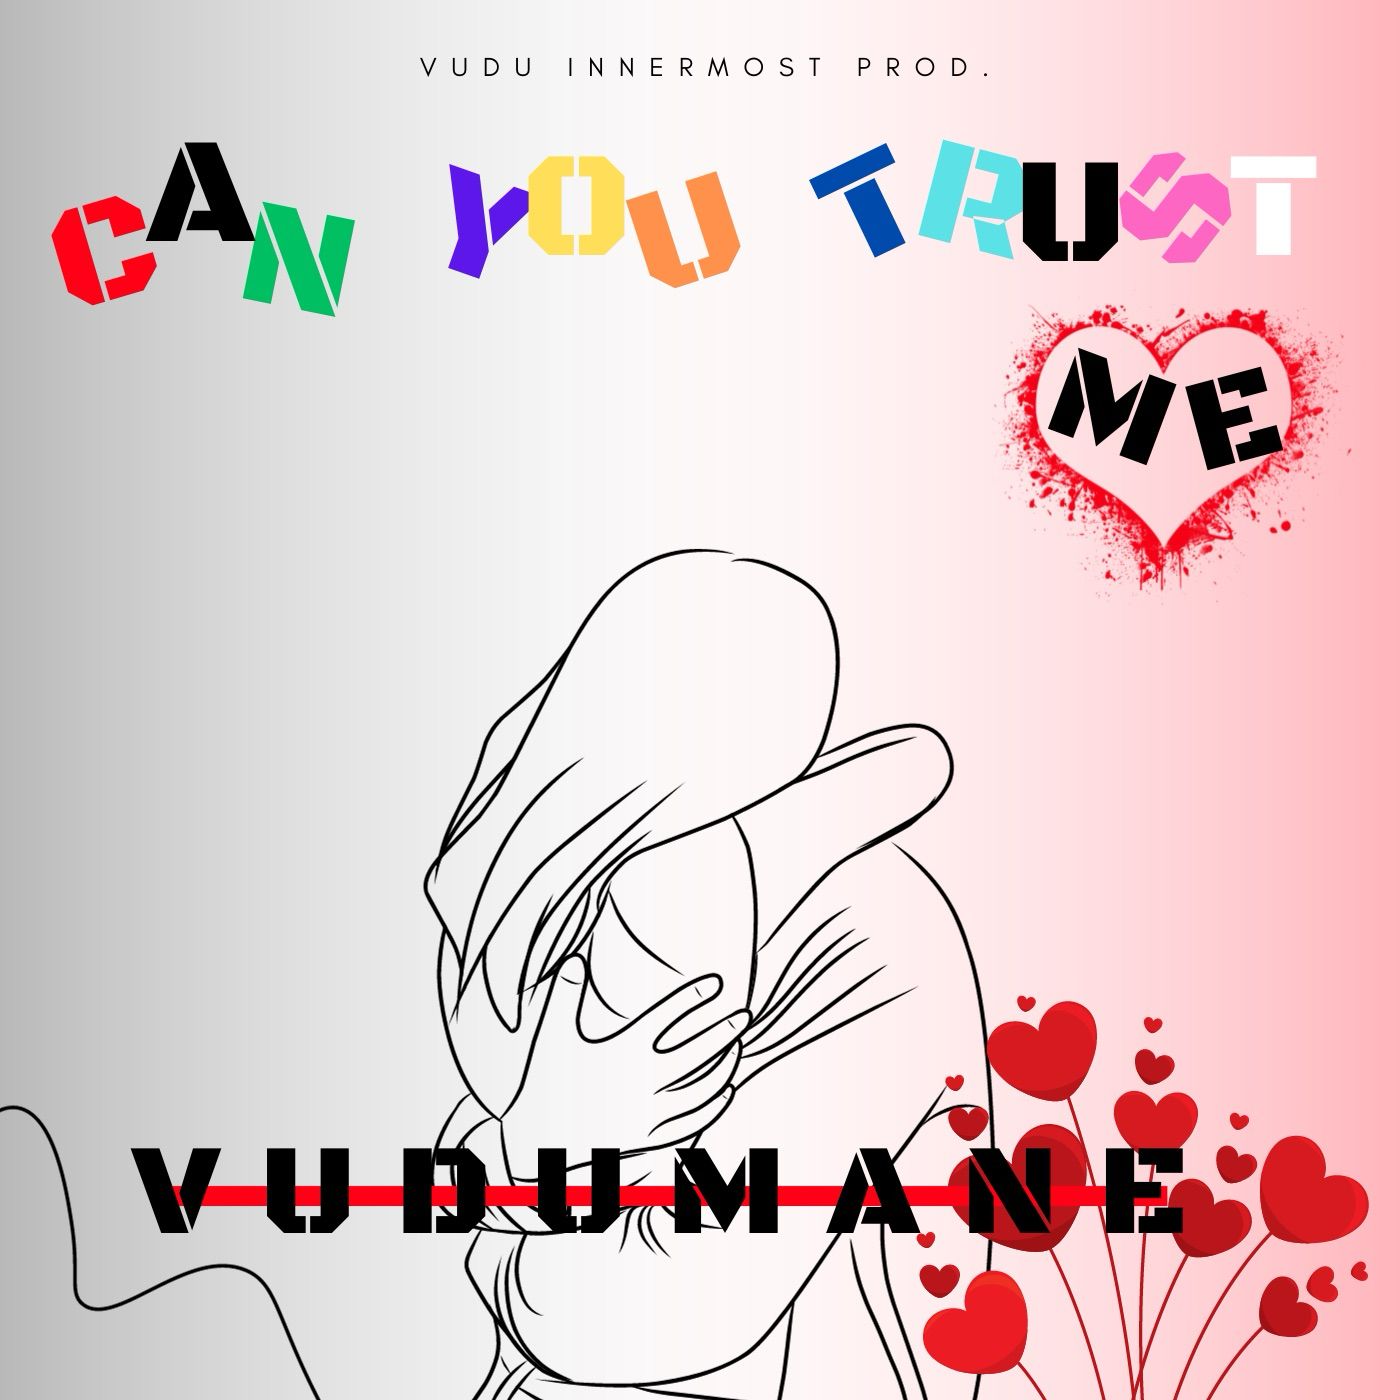 Vudumane - Can You Trust Me